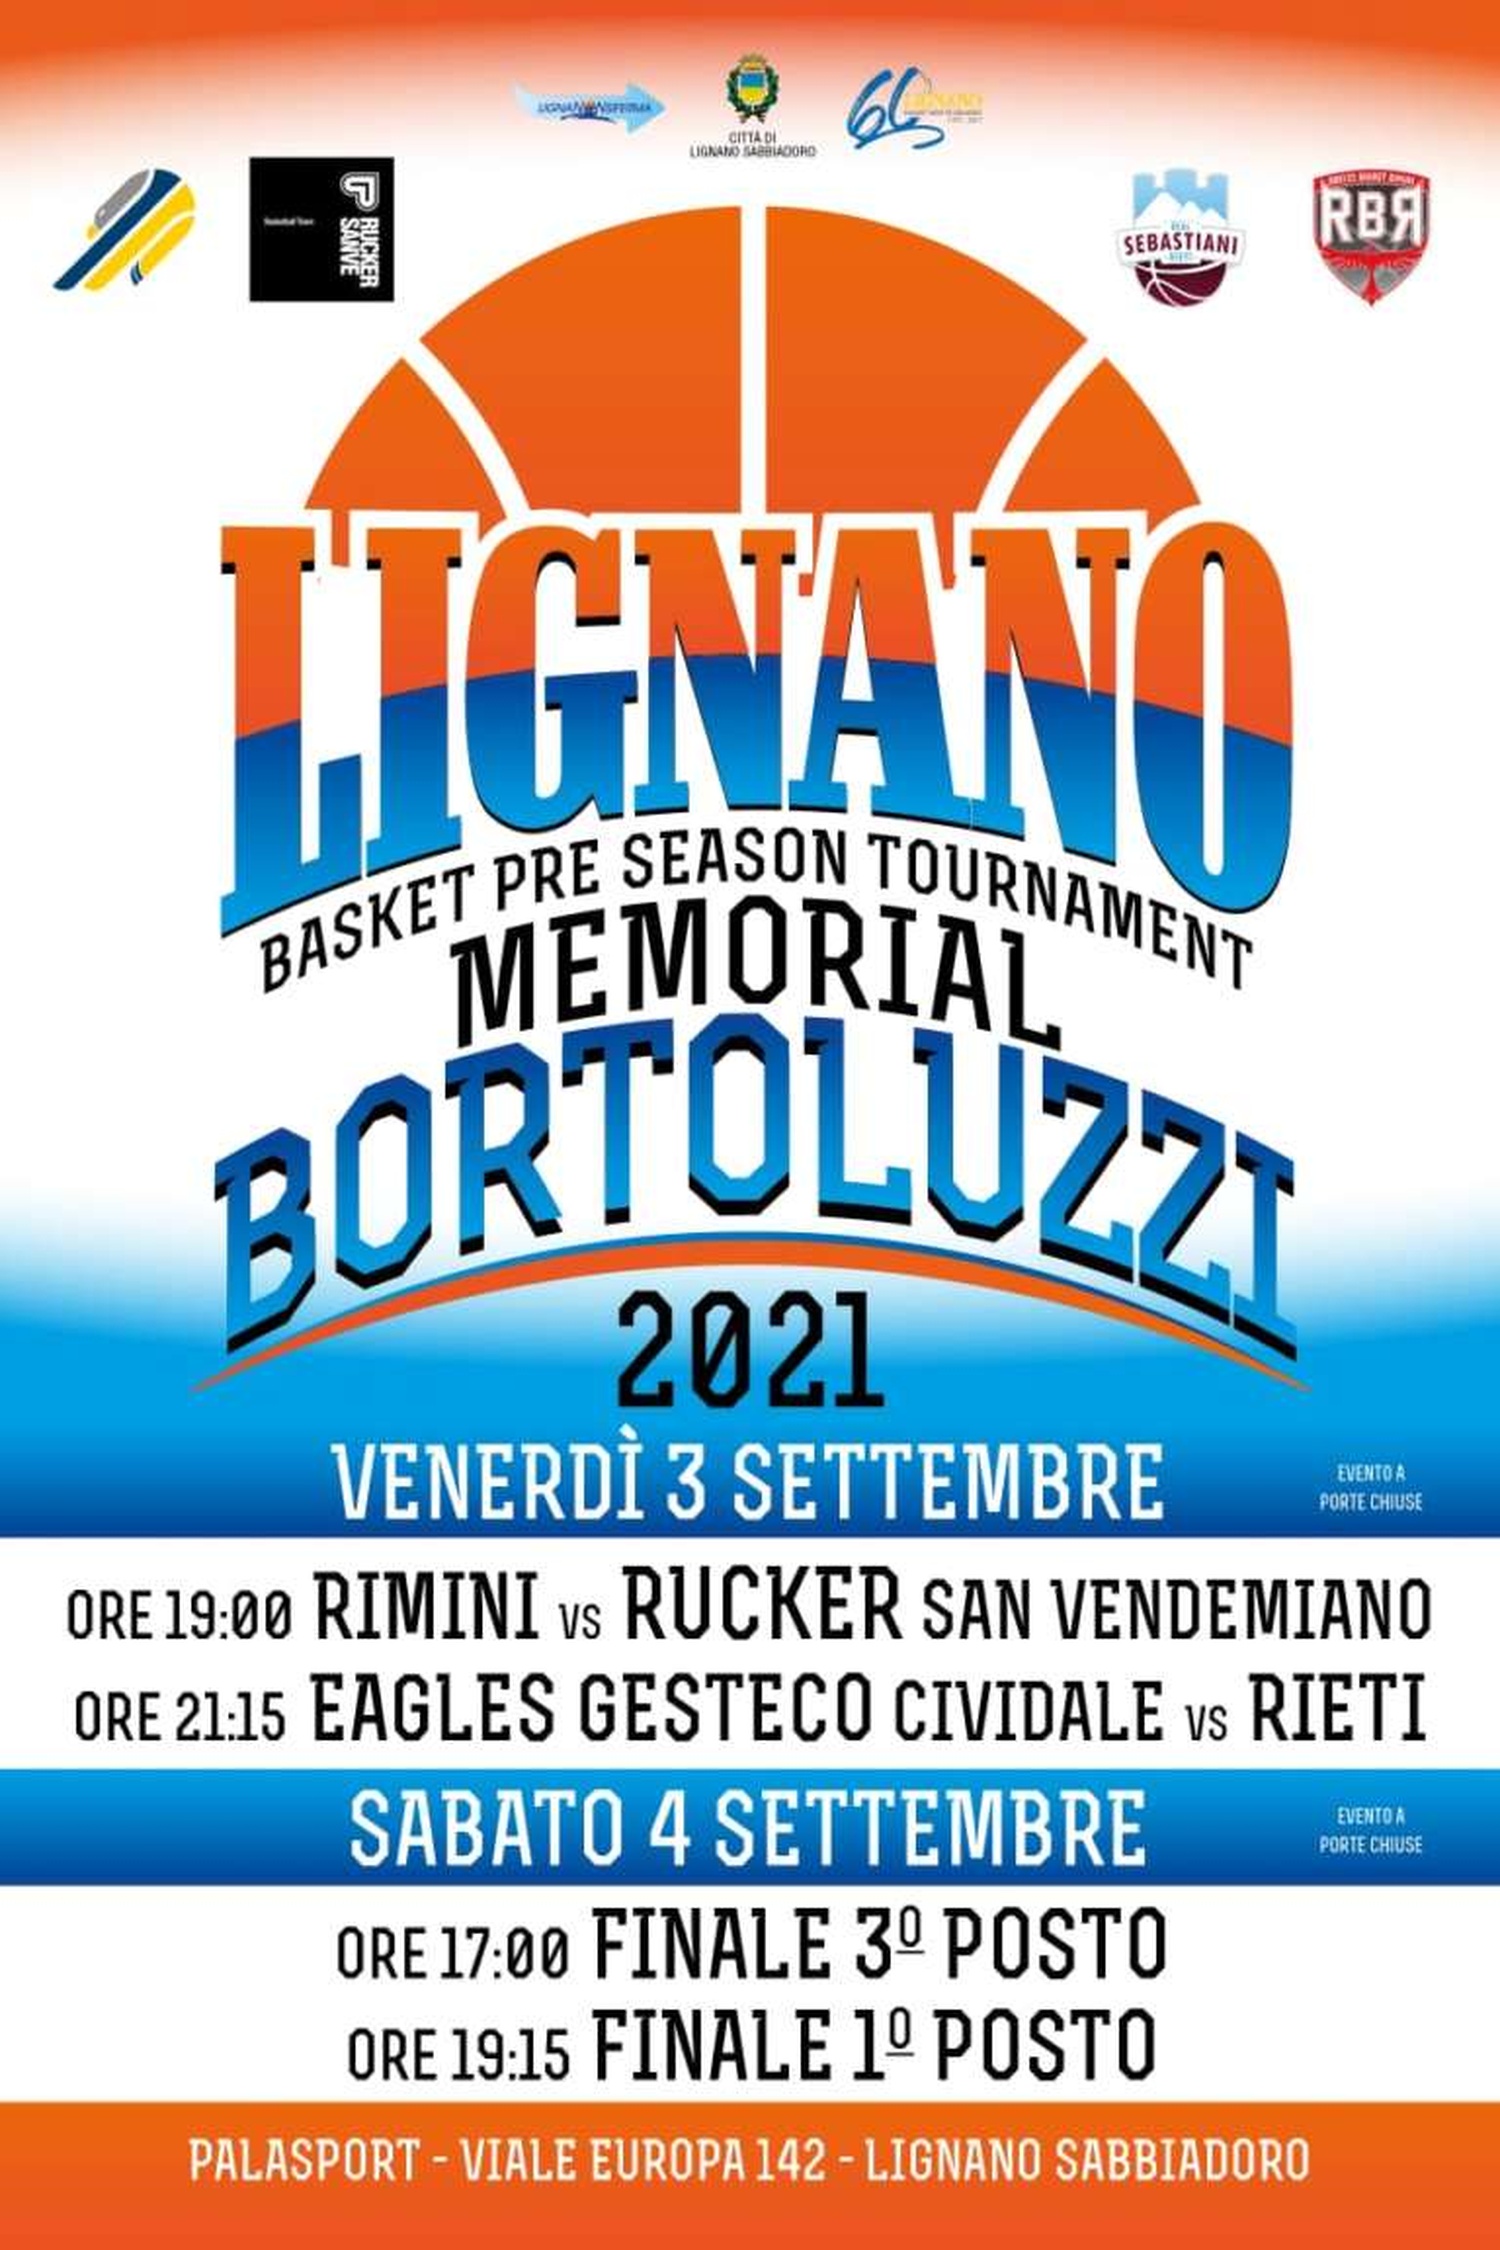 Foto di Memorial Bortoluzzi - Basket pro season tournament